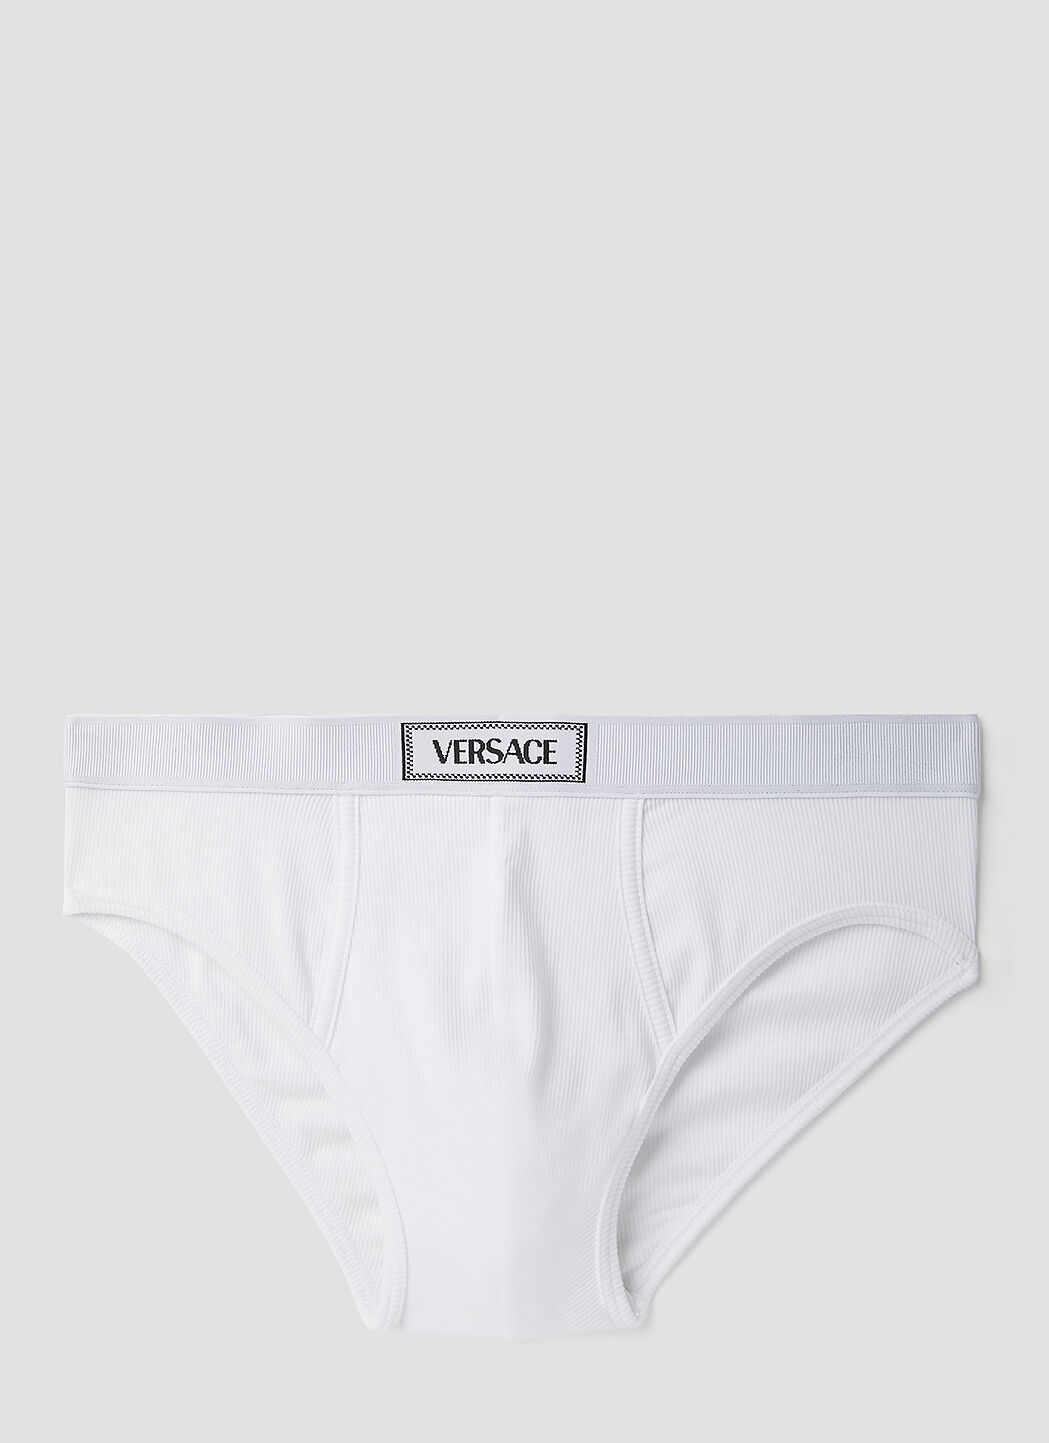 Versace 90s ロゴブリーフ ホワイト ver0158021